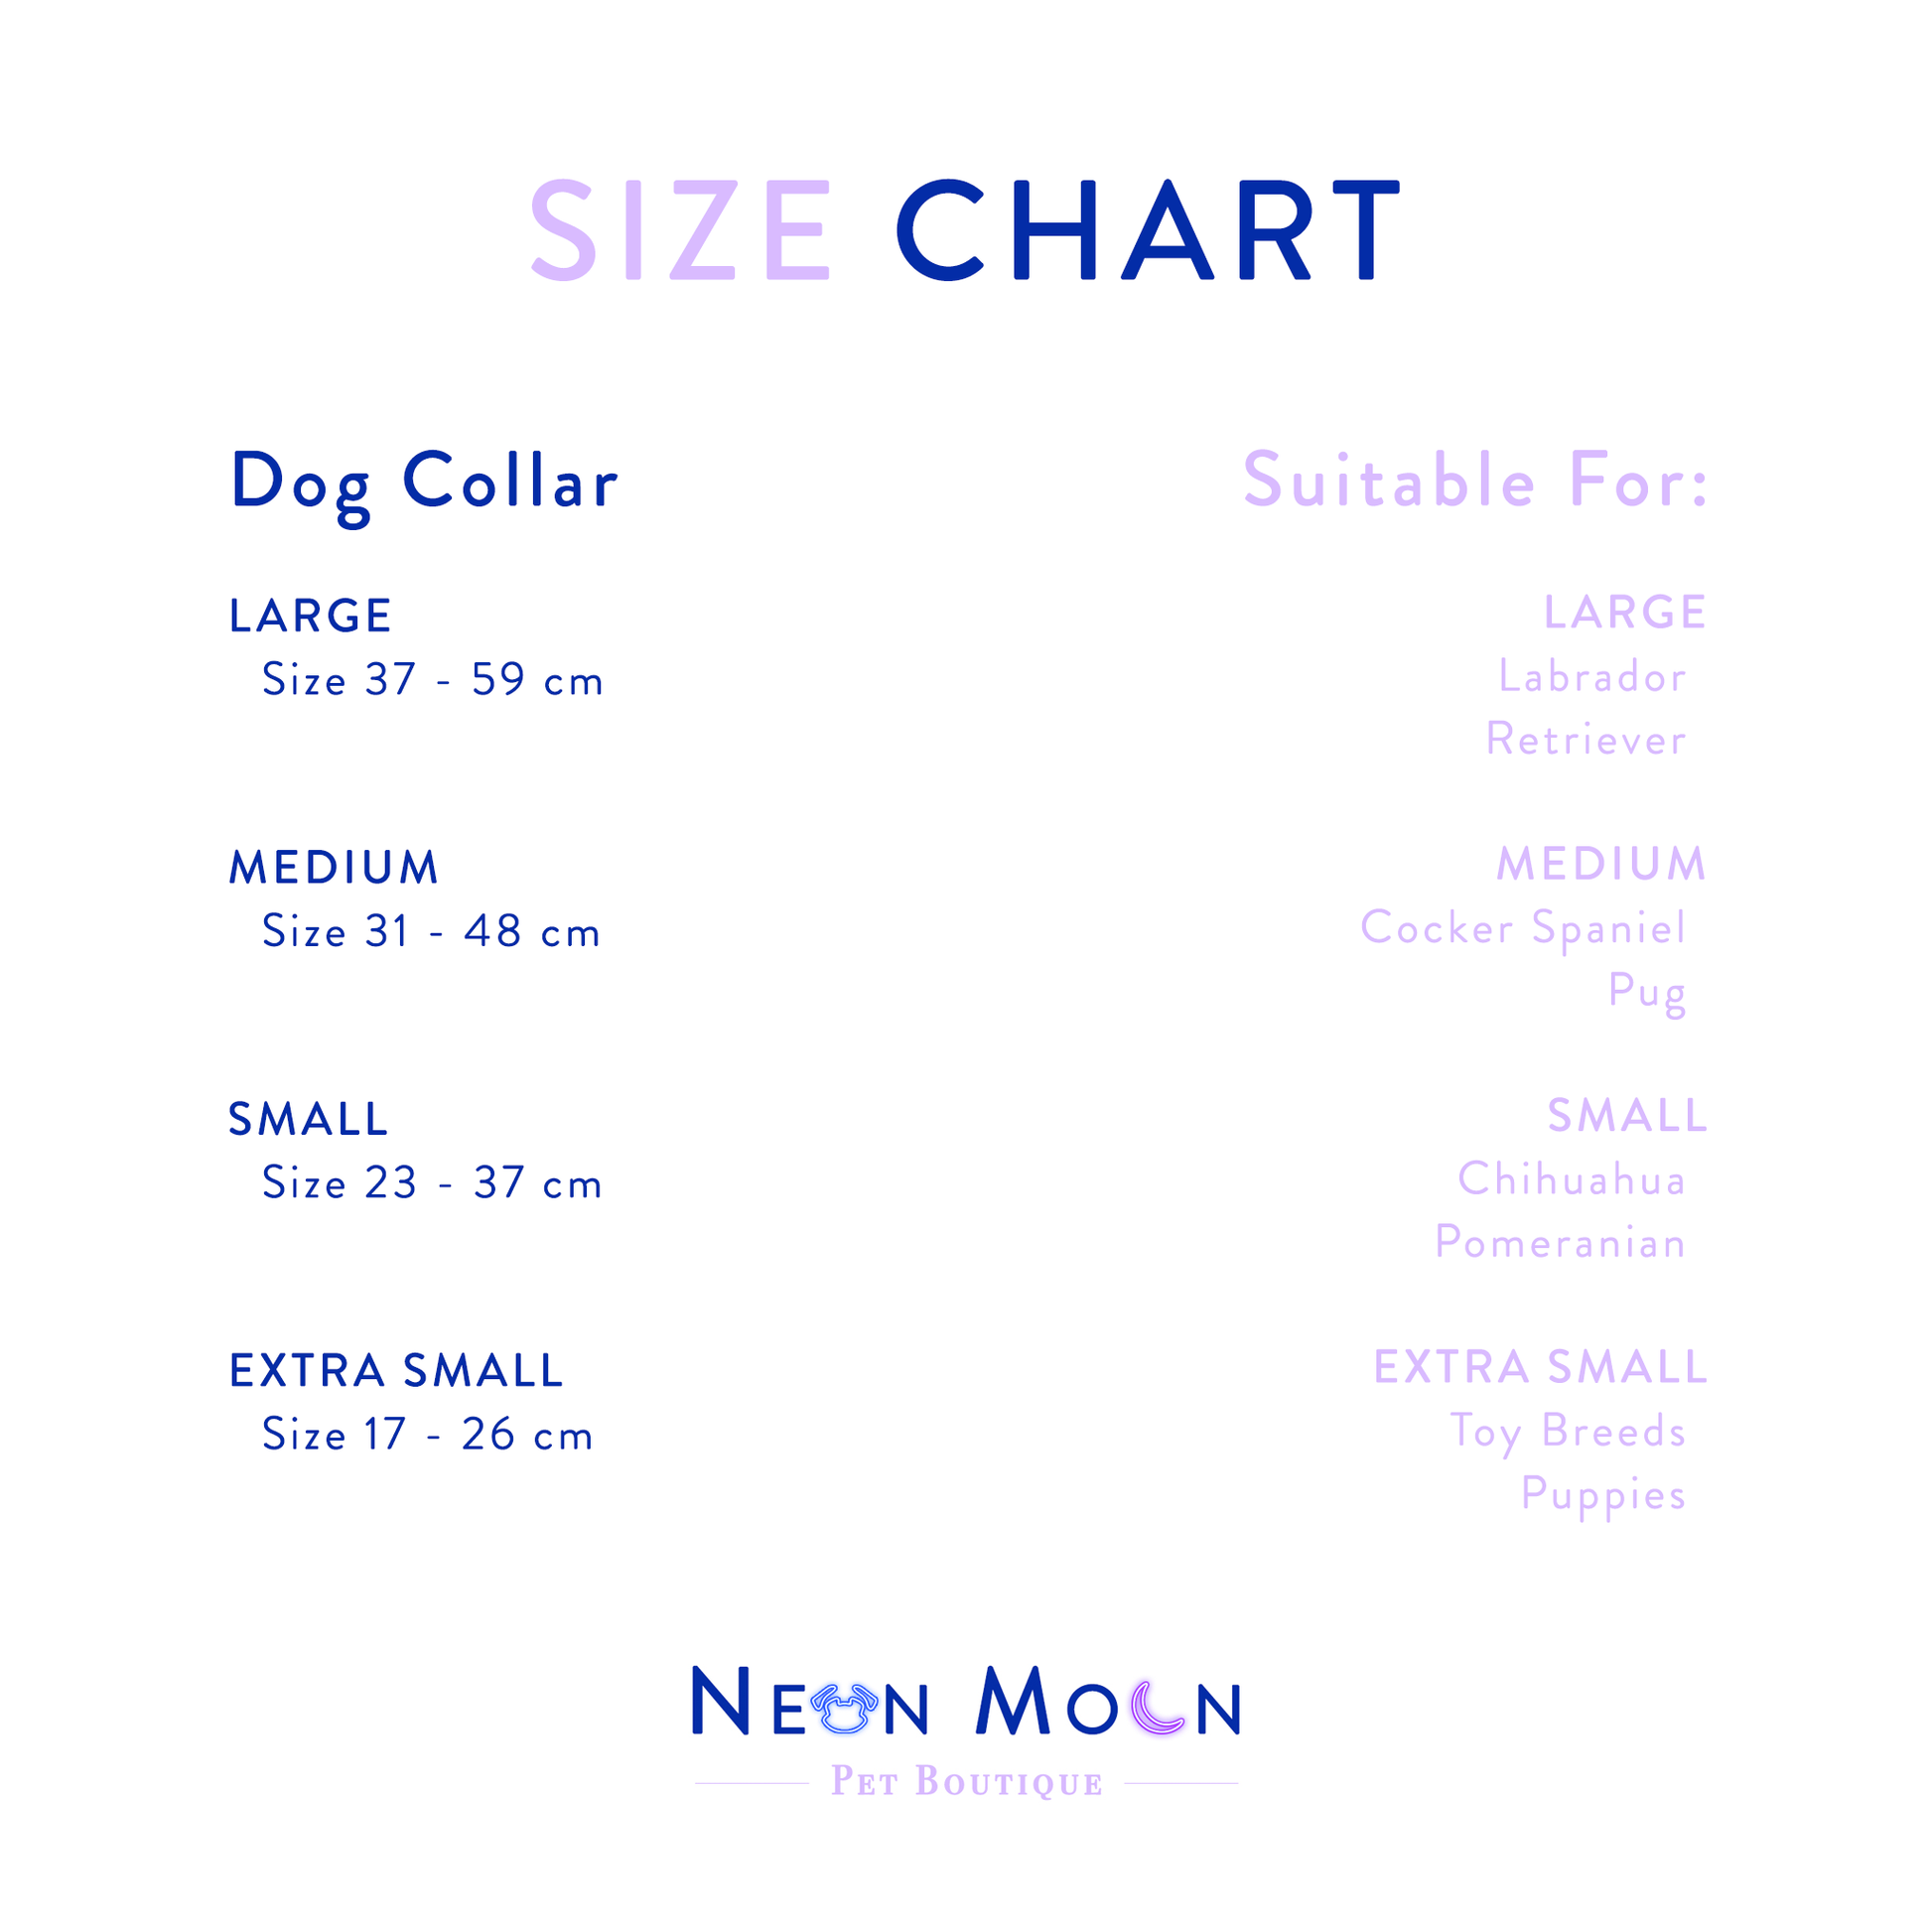 Neon Moon Dog Collar Size Chart